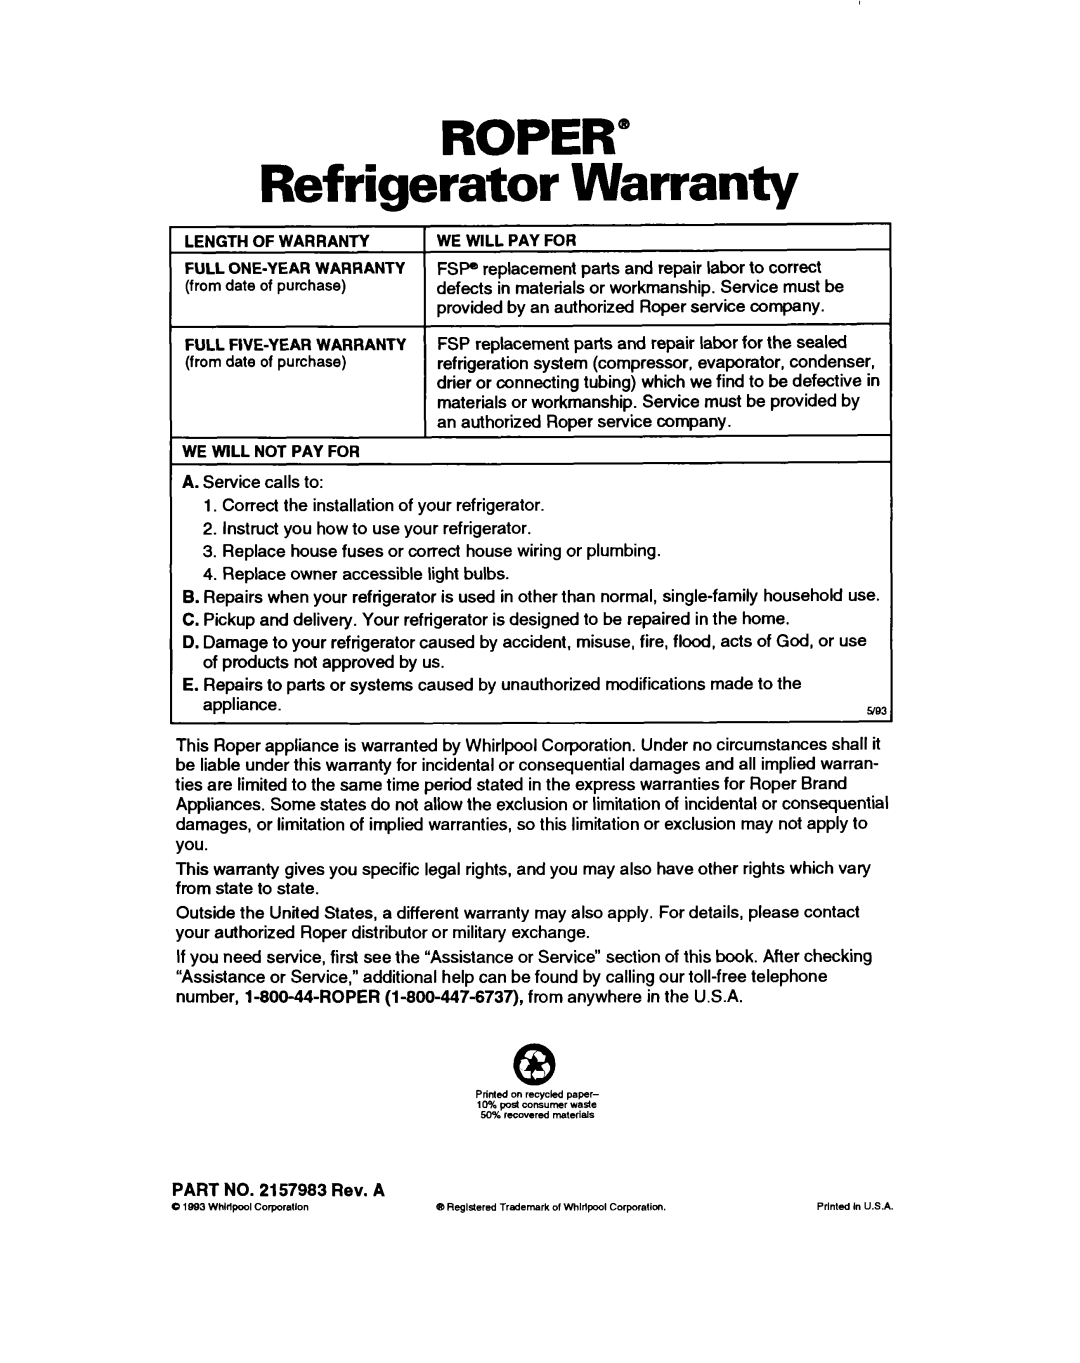 Whirlpool RT18BM, RT18DK, RT18AK, RT20AK, RT20BK, RT18BK, RT22AK, RT18HD ROPER” Refrigerator Warranty, PART NO. 2157983 Rev. A 